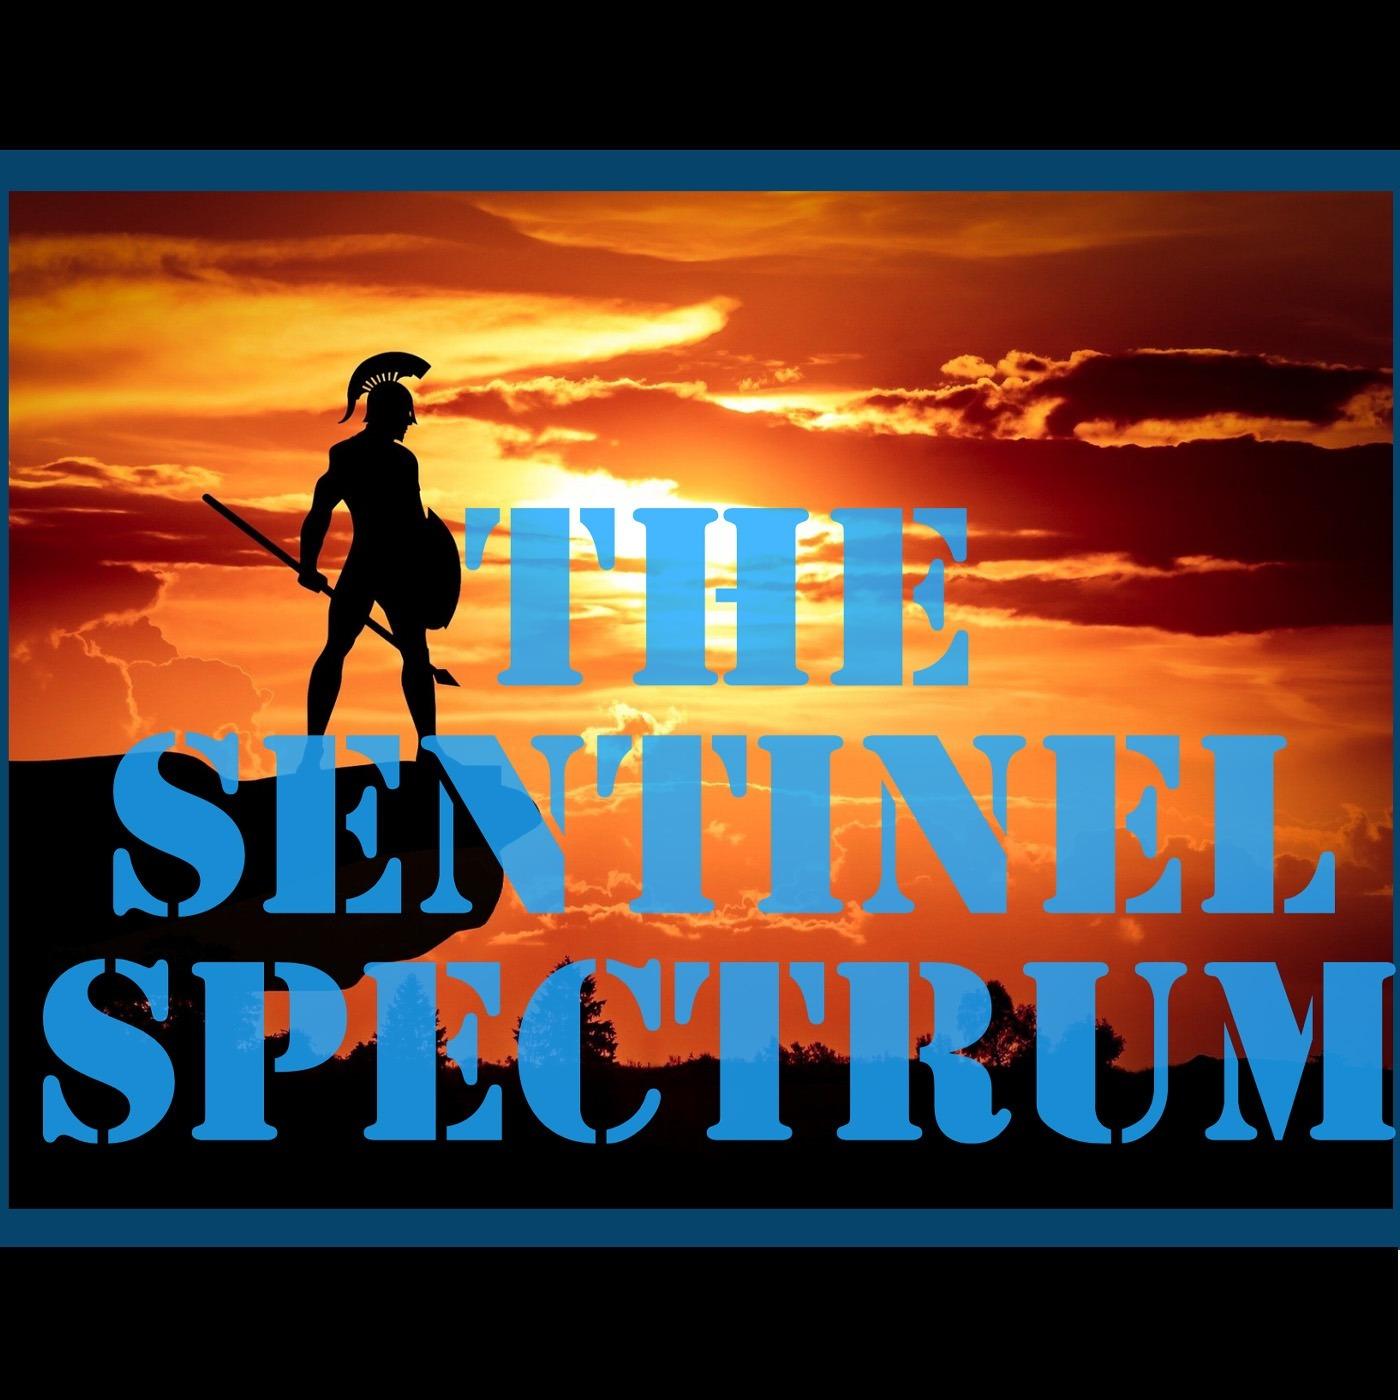 The Sentinel Spectrum